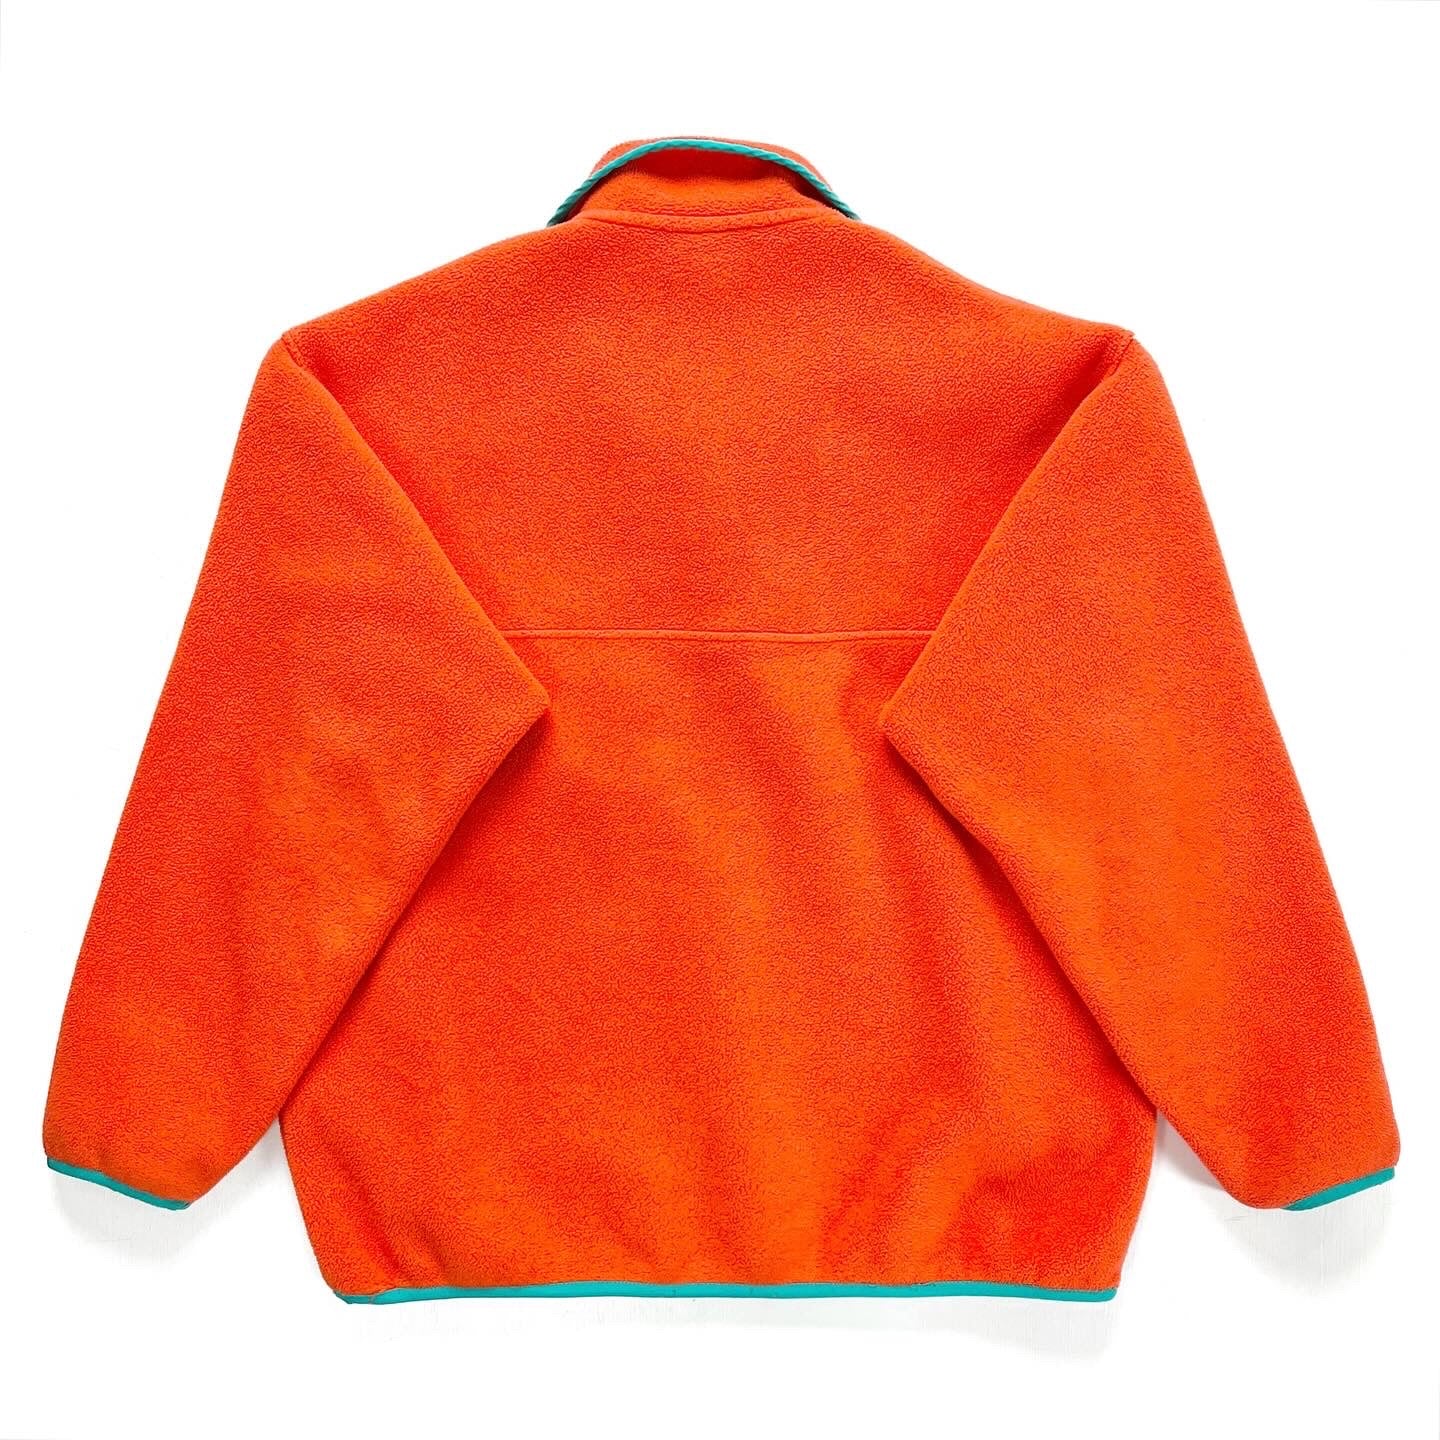 2011 Patagonia Synchilla Snap-T Fleece Pullover, Orange & Aqua (XL)